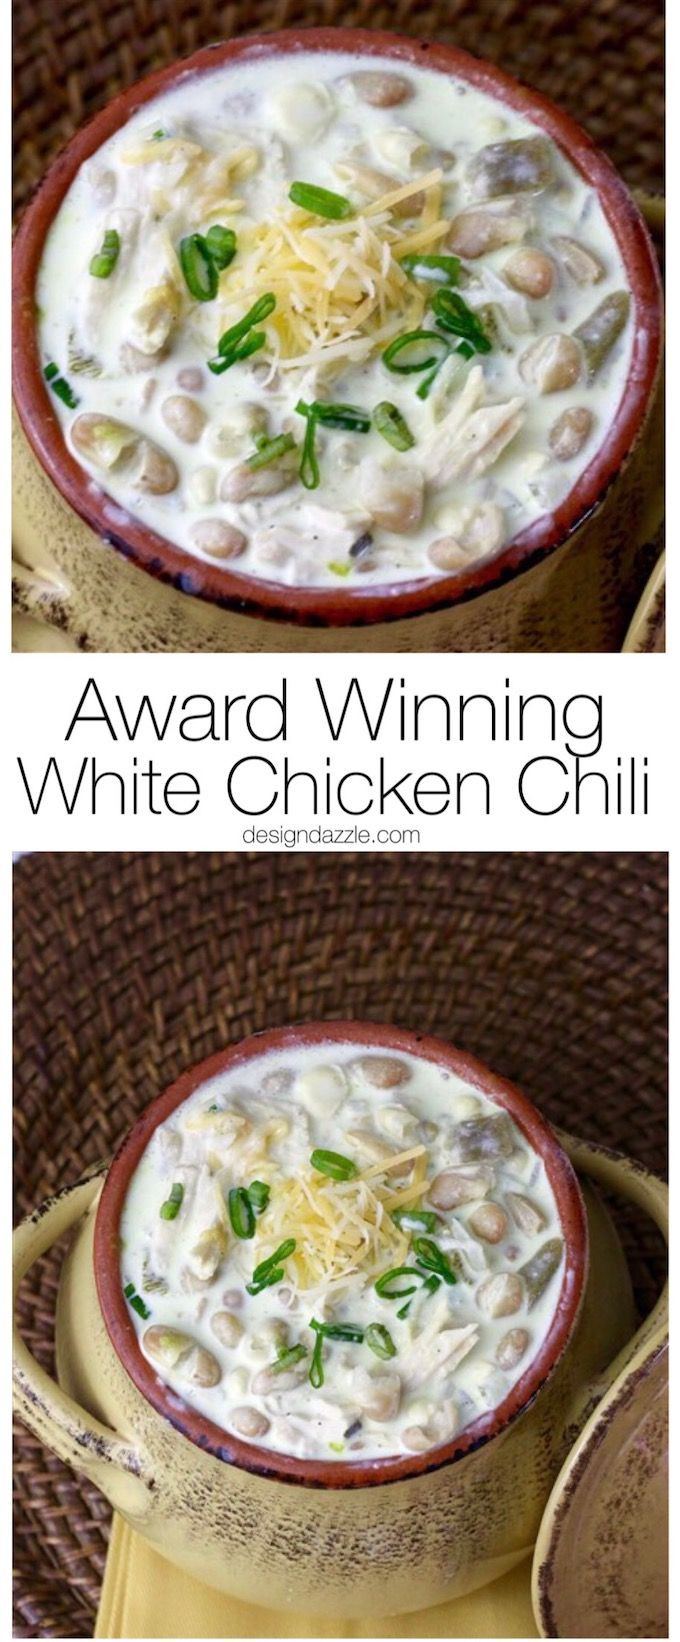 Best White Chicken Chili Recipe Winner
 Creamy White Chicken Chili Recipe